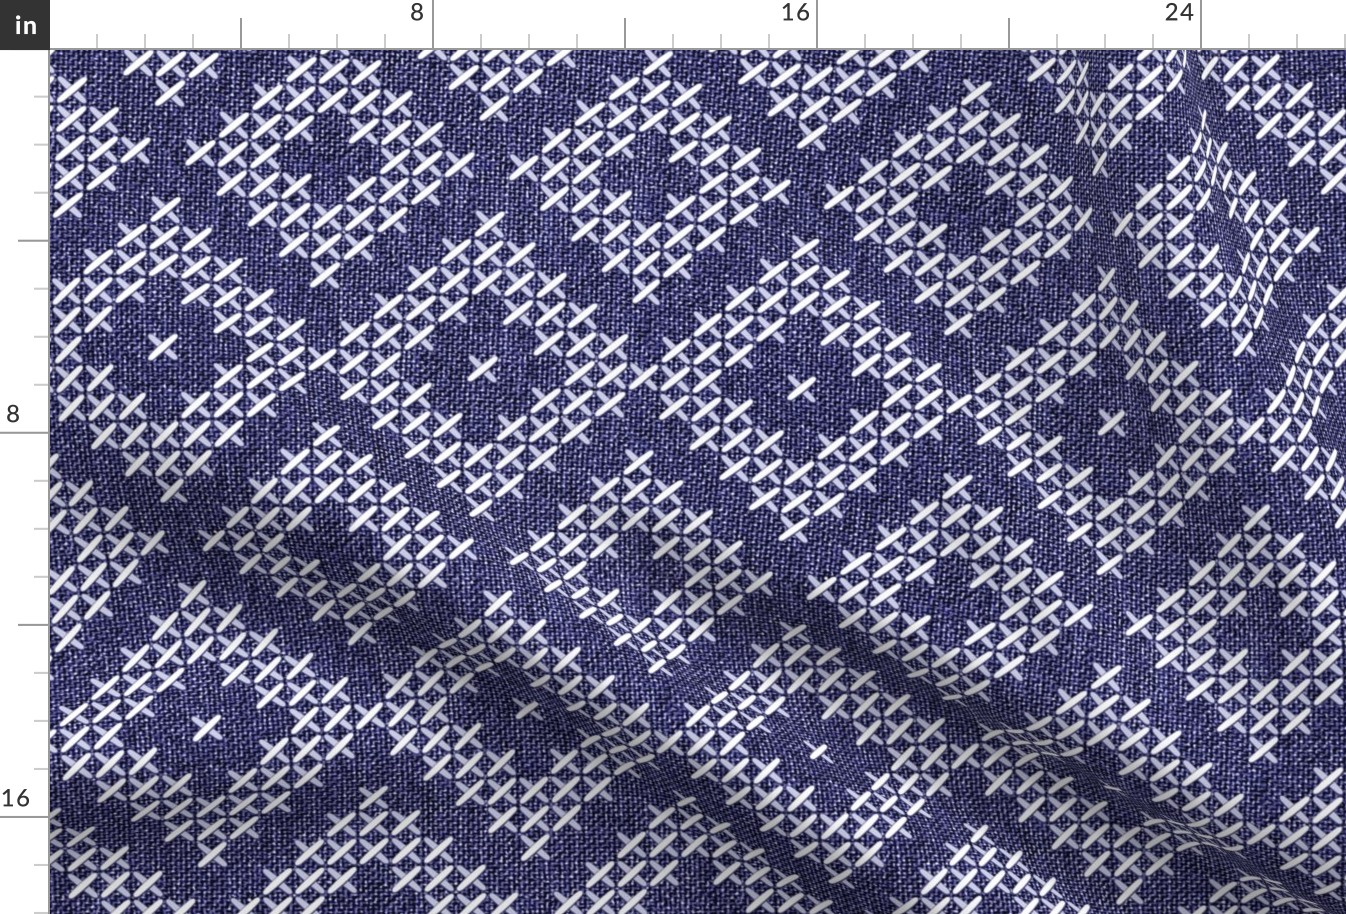 Aztec diamonds cross-stitch navy blue faux fabric texture Fabric